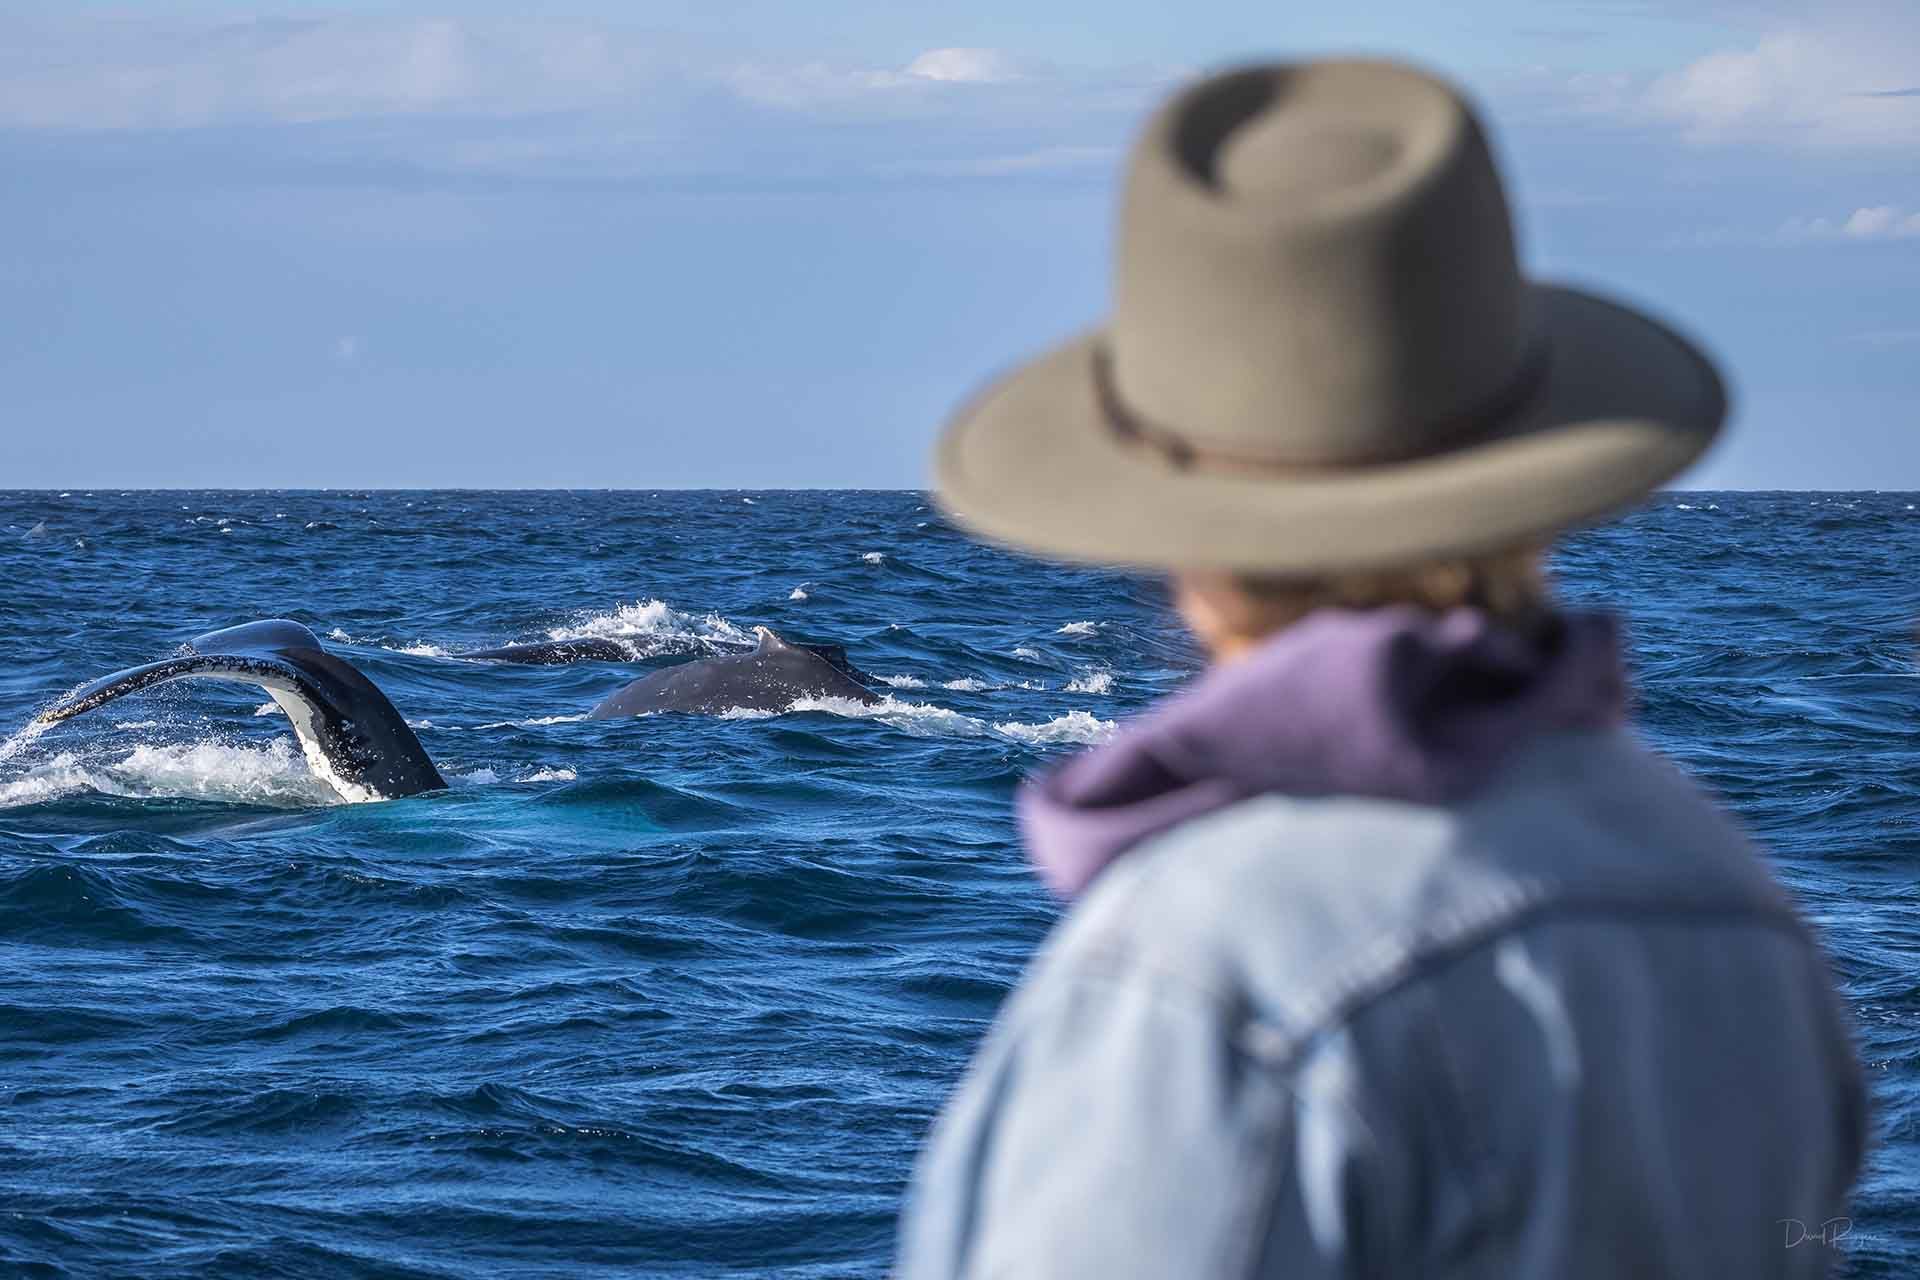 The Destination Agency, Sapphire Coast - Whale Trail - Tourism Marketing Project